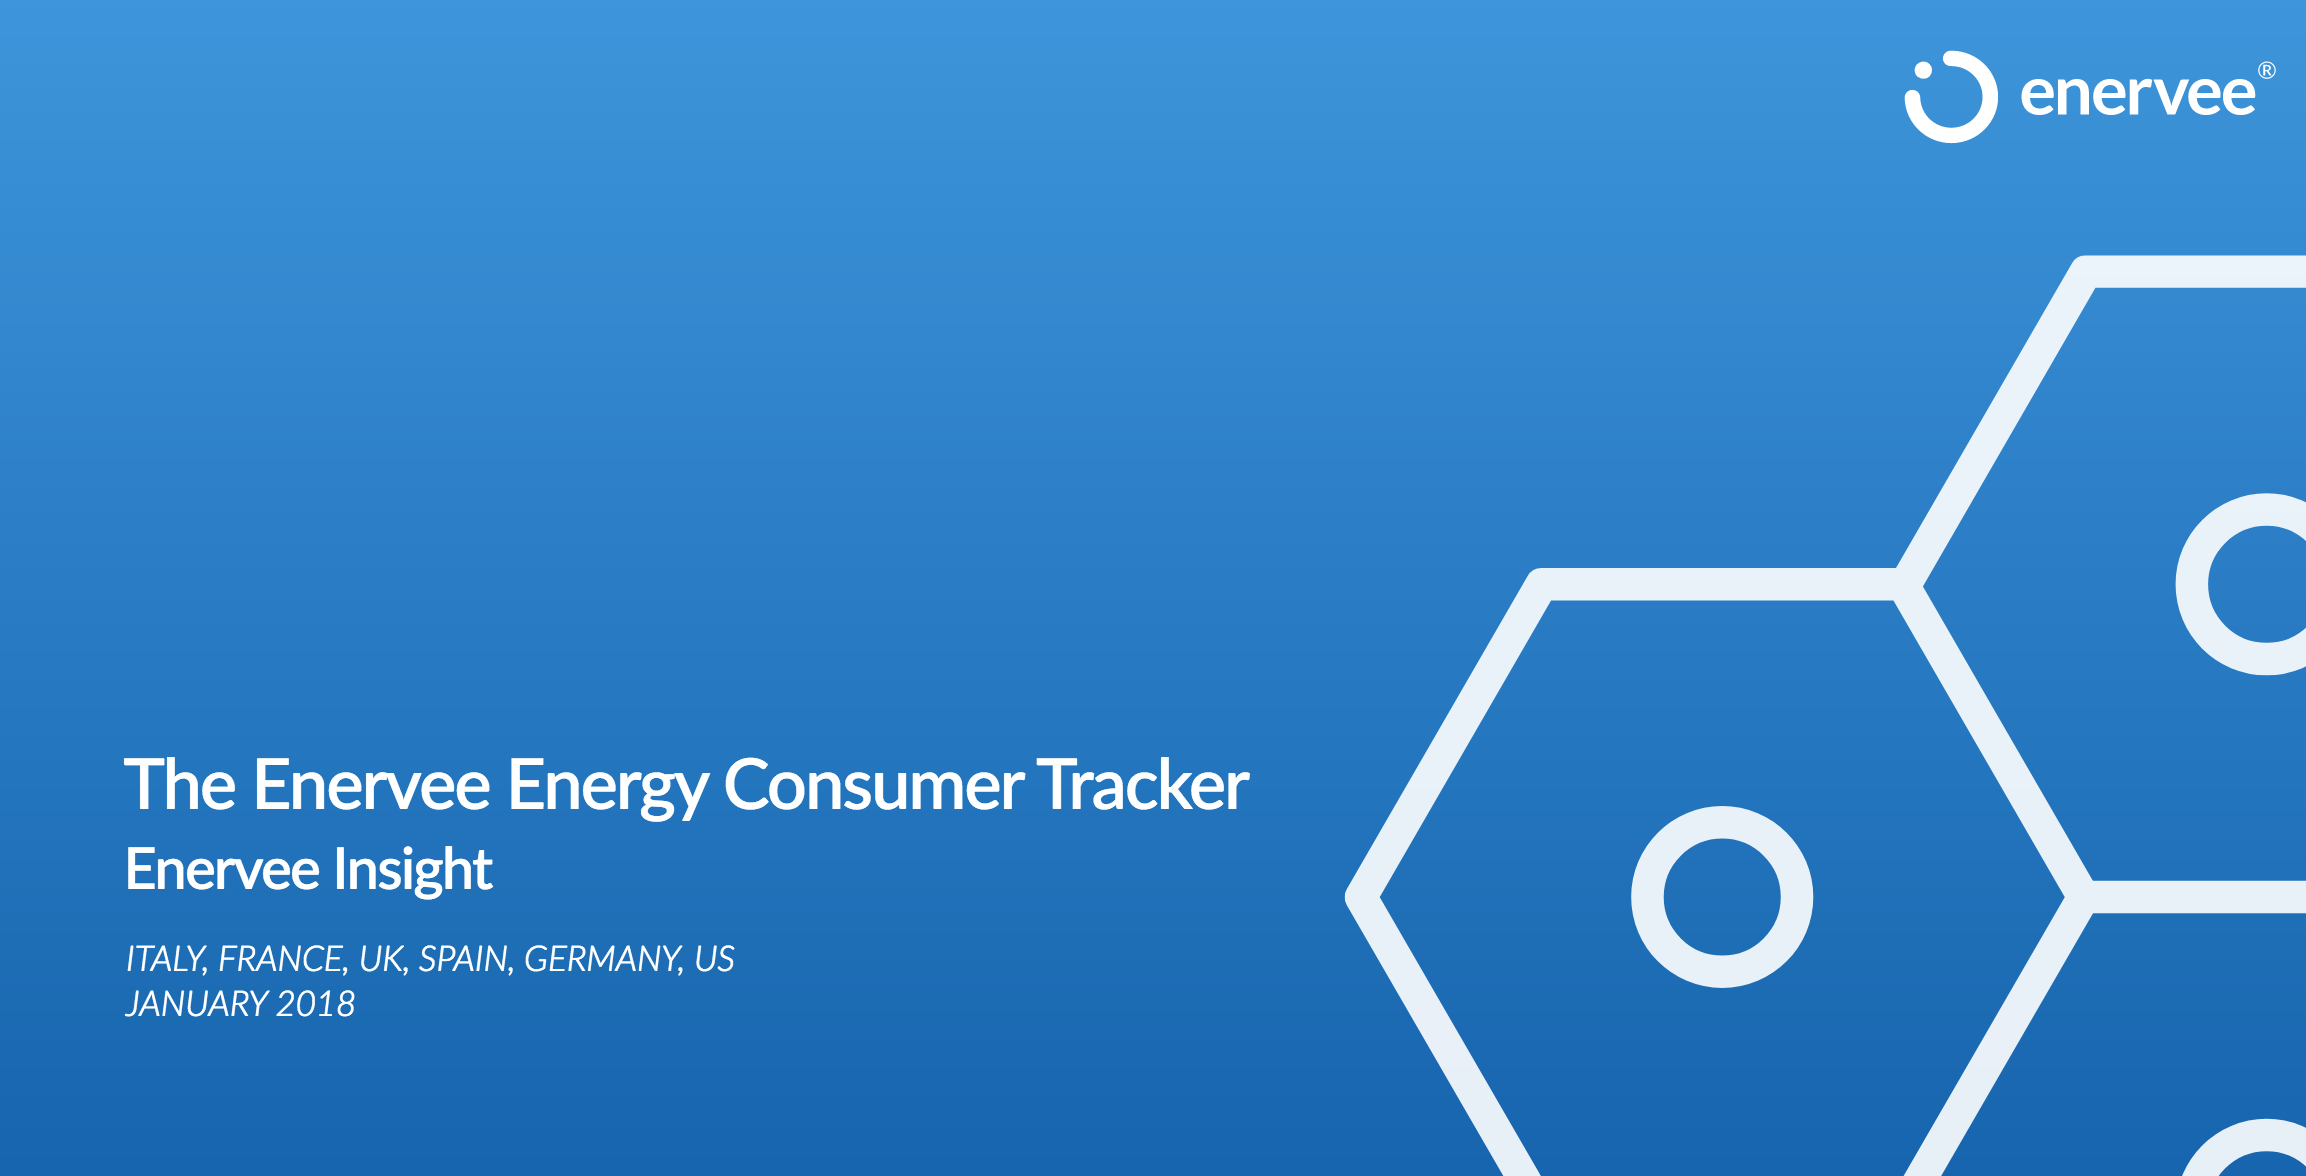 The Enervee Energy Consumer Tracker